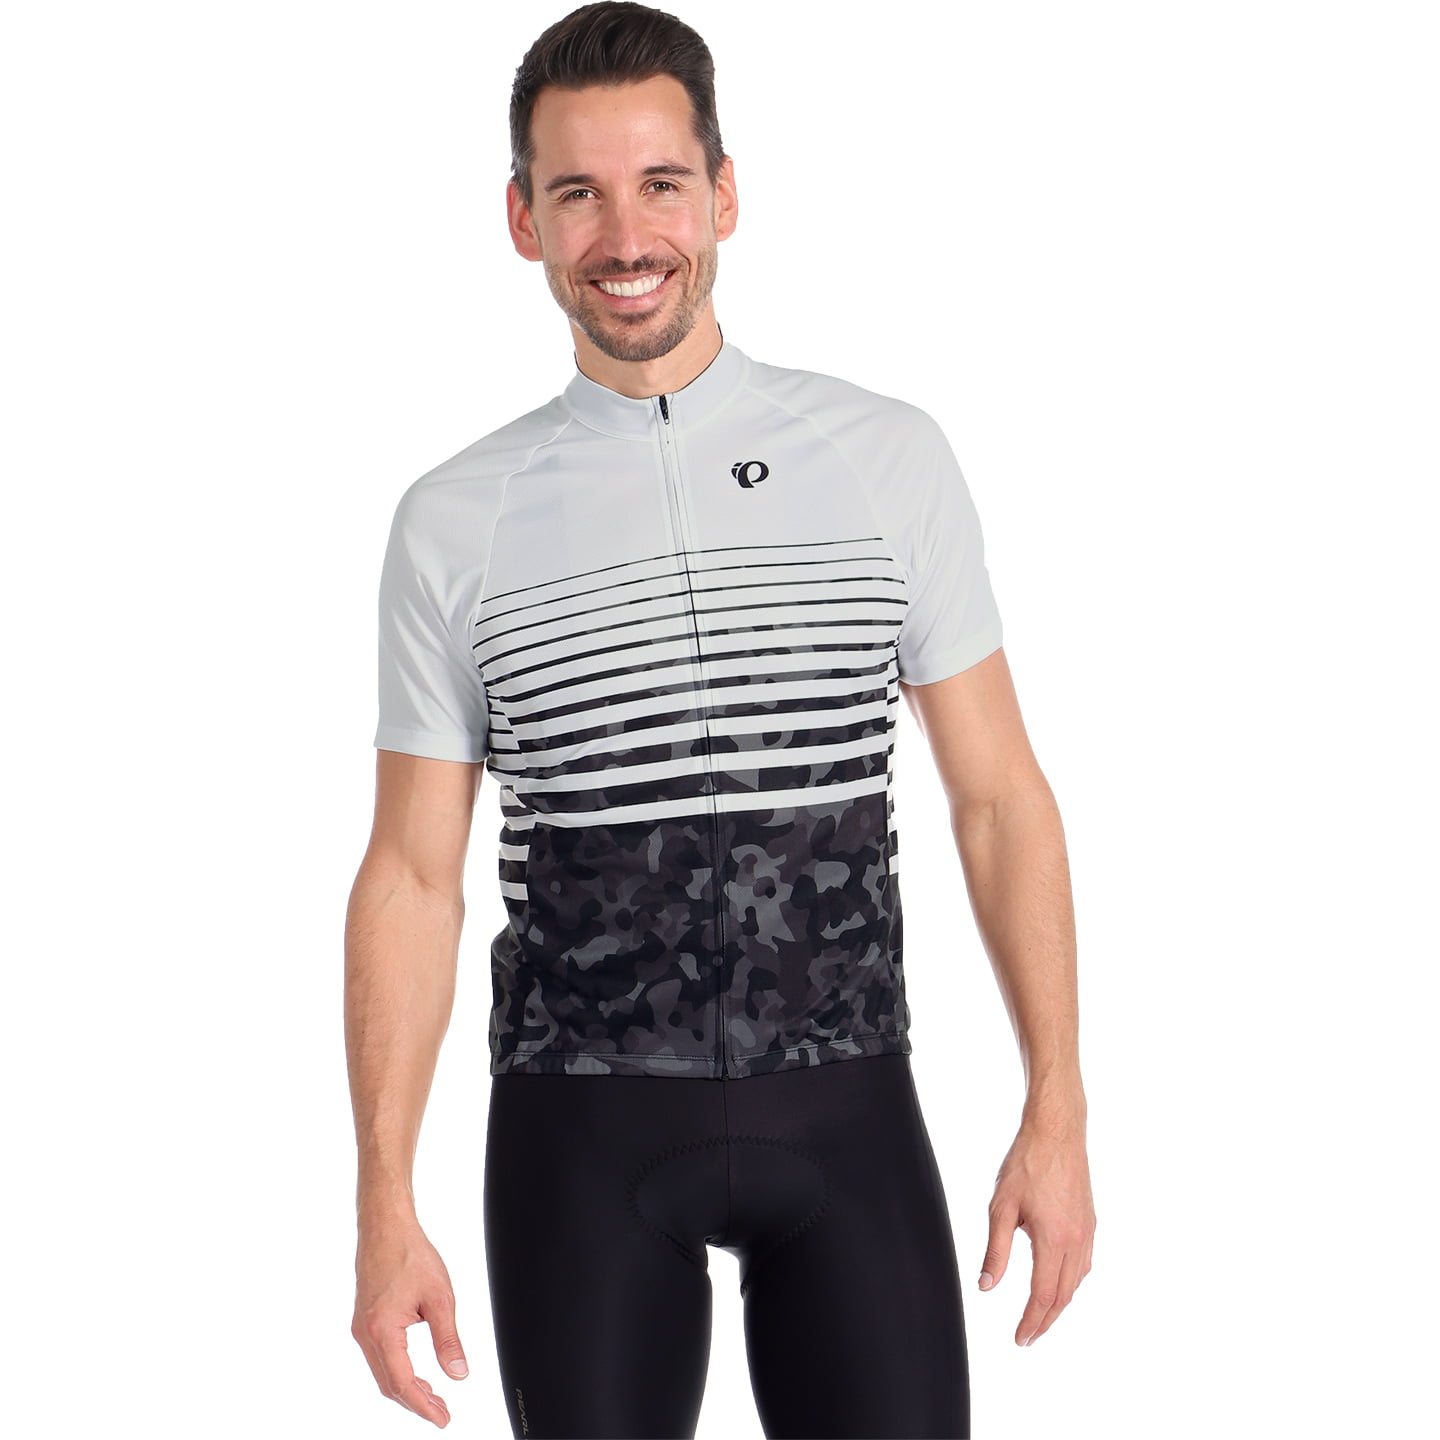 PEARL IZUMI Classic Short Sleeve Jersey Short Sleeve Jersey, for men, size M, Cycling jersey, Cycling clothing